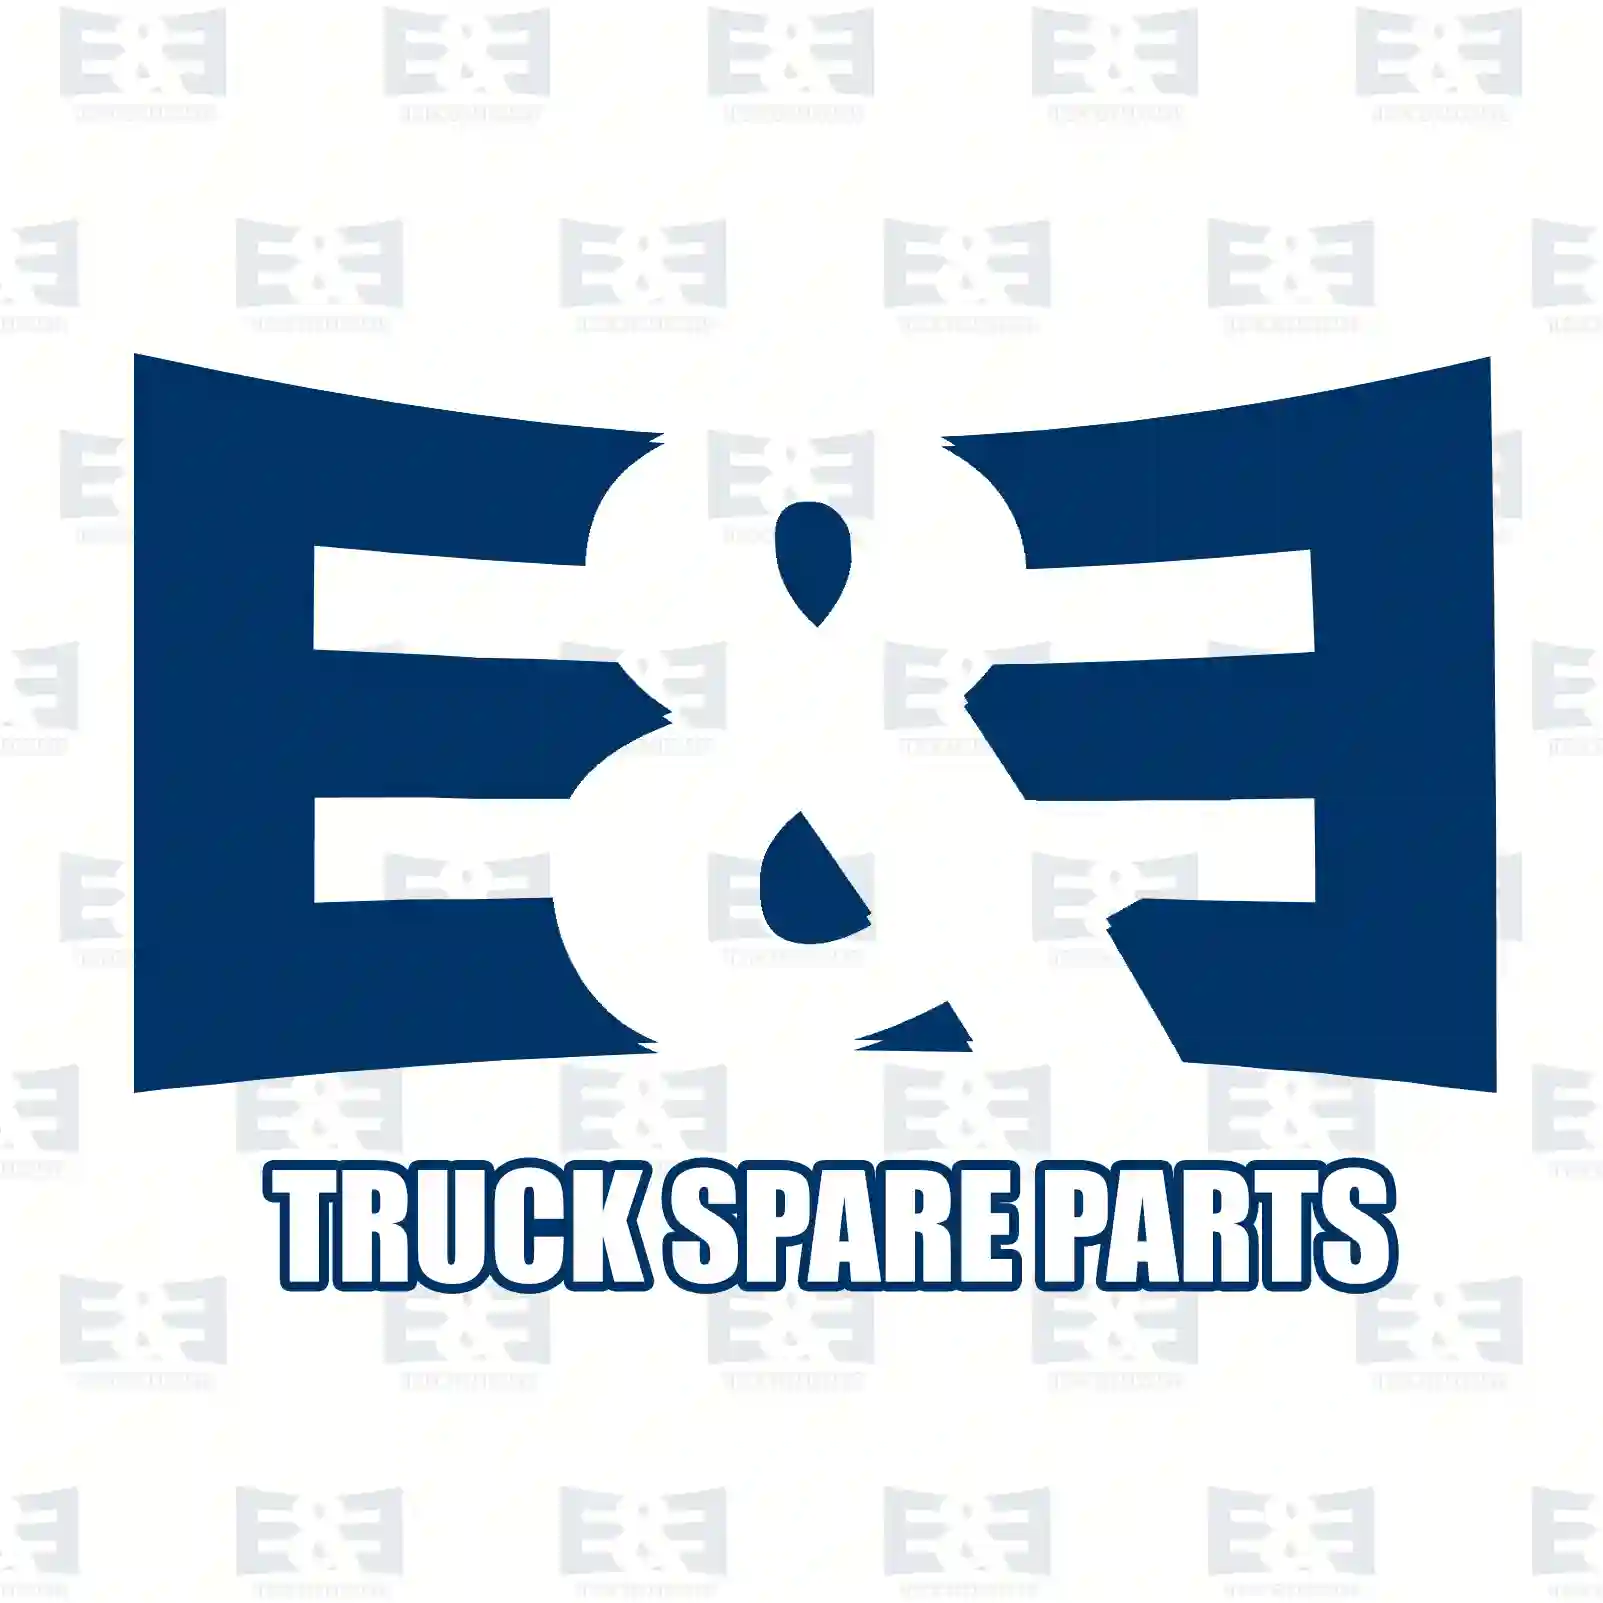 Expanding rivet, 2E2276121, 51470146782, 51470390017, 51471911992, 1299900092, 2019900292, 20199002927B90, 20199002927C72, 20199002929051, M820141, 2019900292, 30820141 ||  2E2276121 E&E Truck Spare Parts | Truck Spare Parts, Auotomotive Spare Parts Expanding rivet, 2E2276121, 51470146782, 51470390017, 51471911992, 1299900092, 2019900292, 20199002927B90, 20199002927C72, 20199002929051, M820141, 2019900292, 30820141 ||  2E2276121 E&E Truck Spare Parts | Truck Spare Parts, Auotomotive Spare Parts